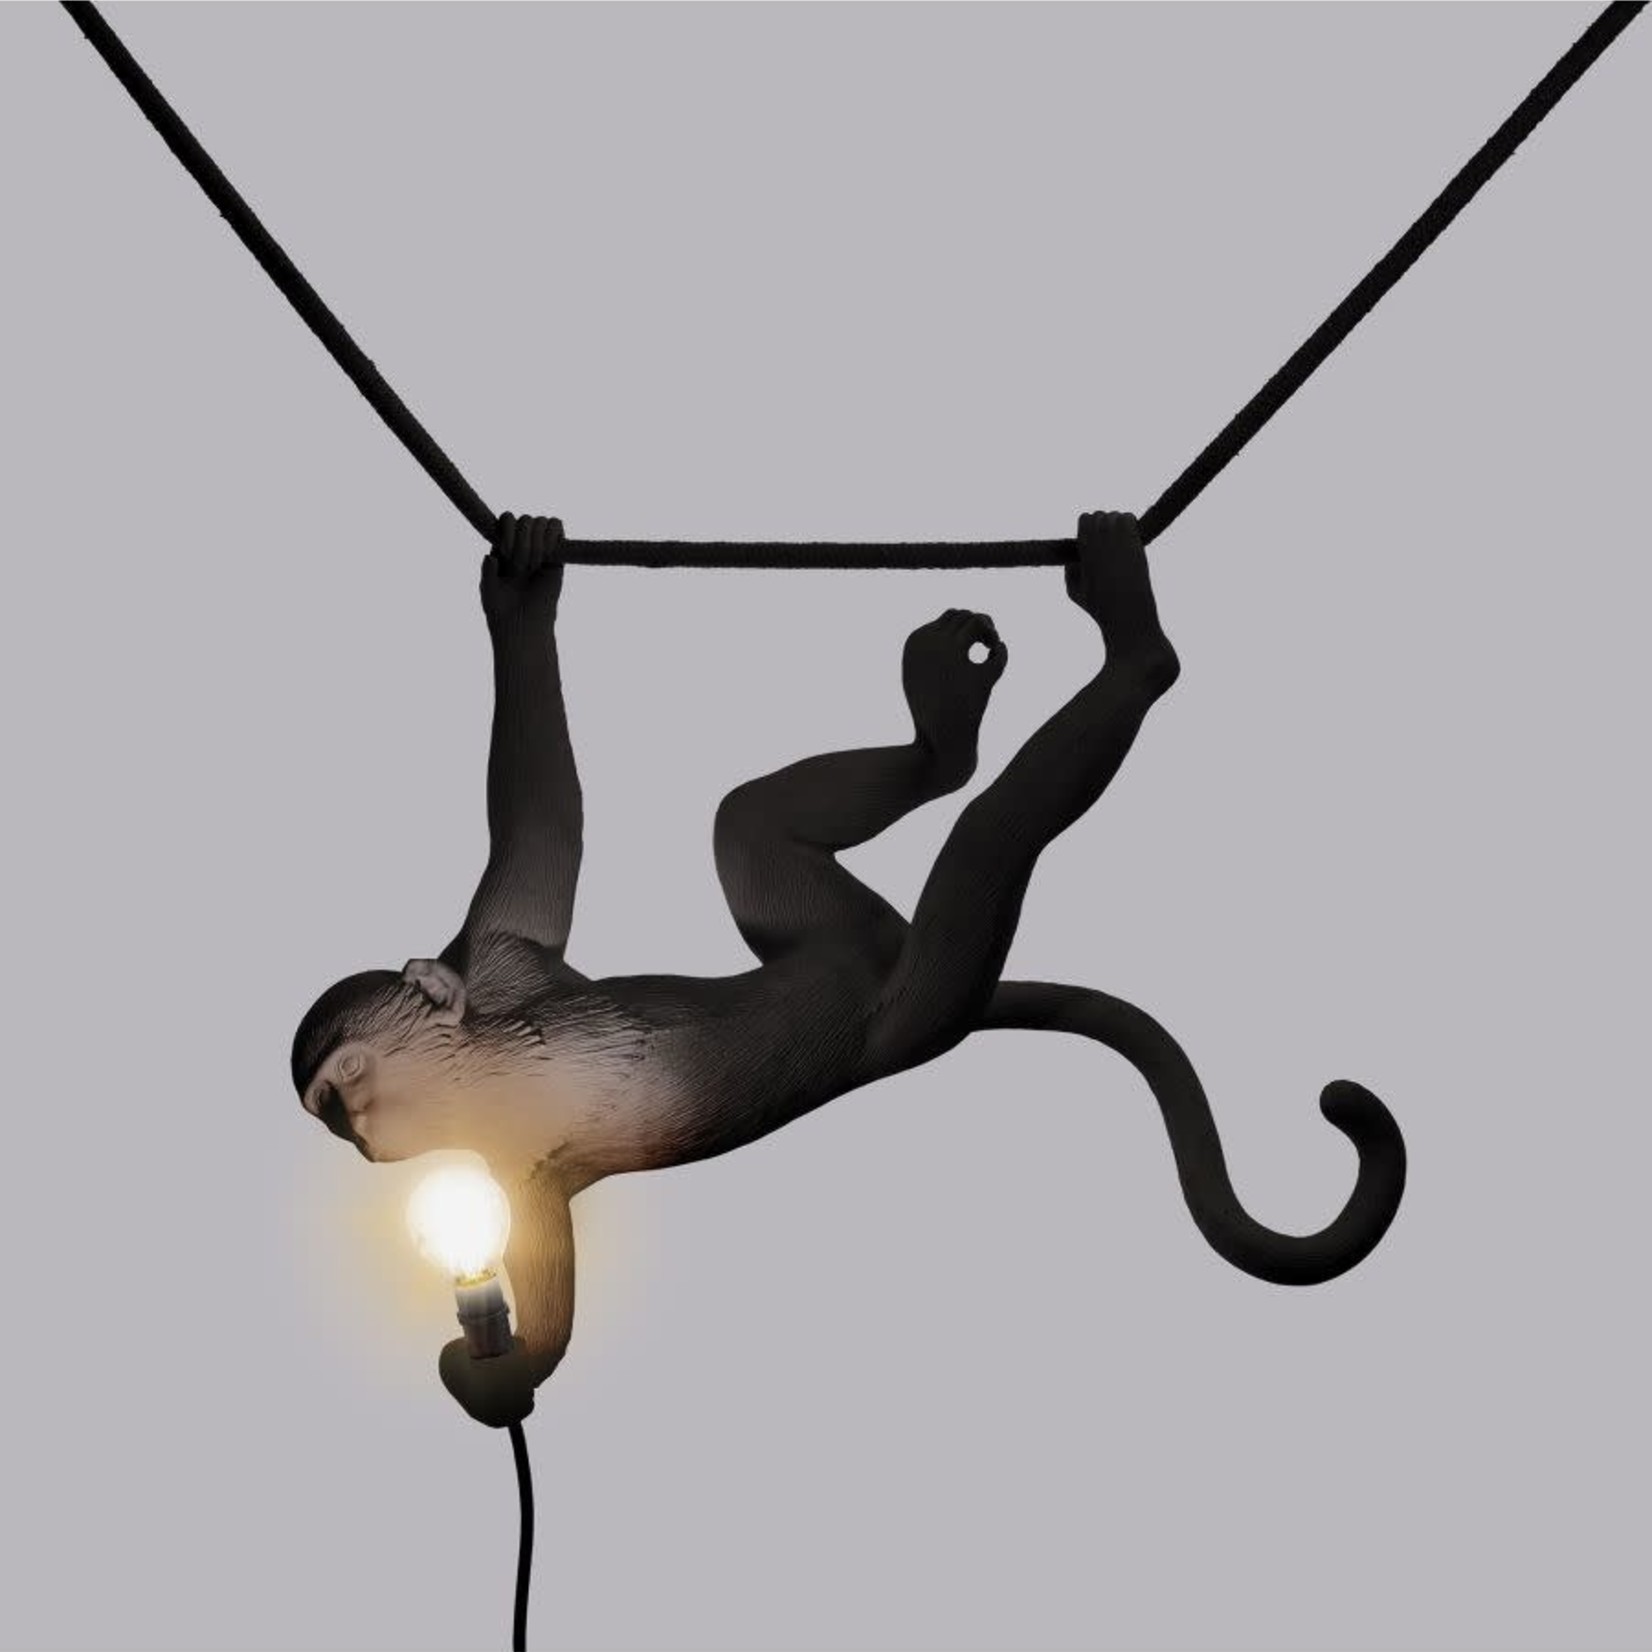 SELETTI SELETTI - The Monkey lamp swing (N°6) - Black